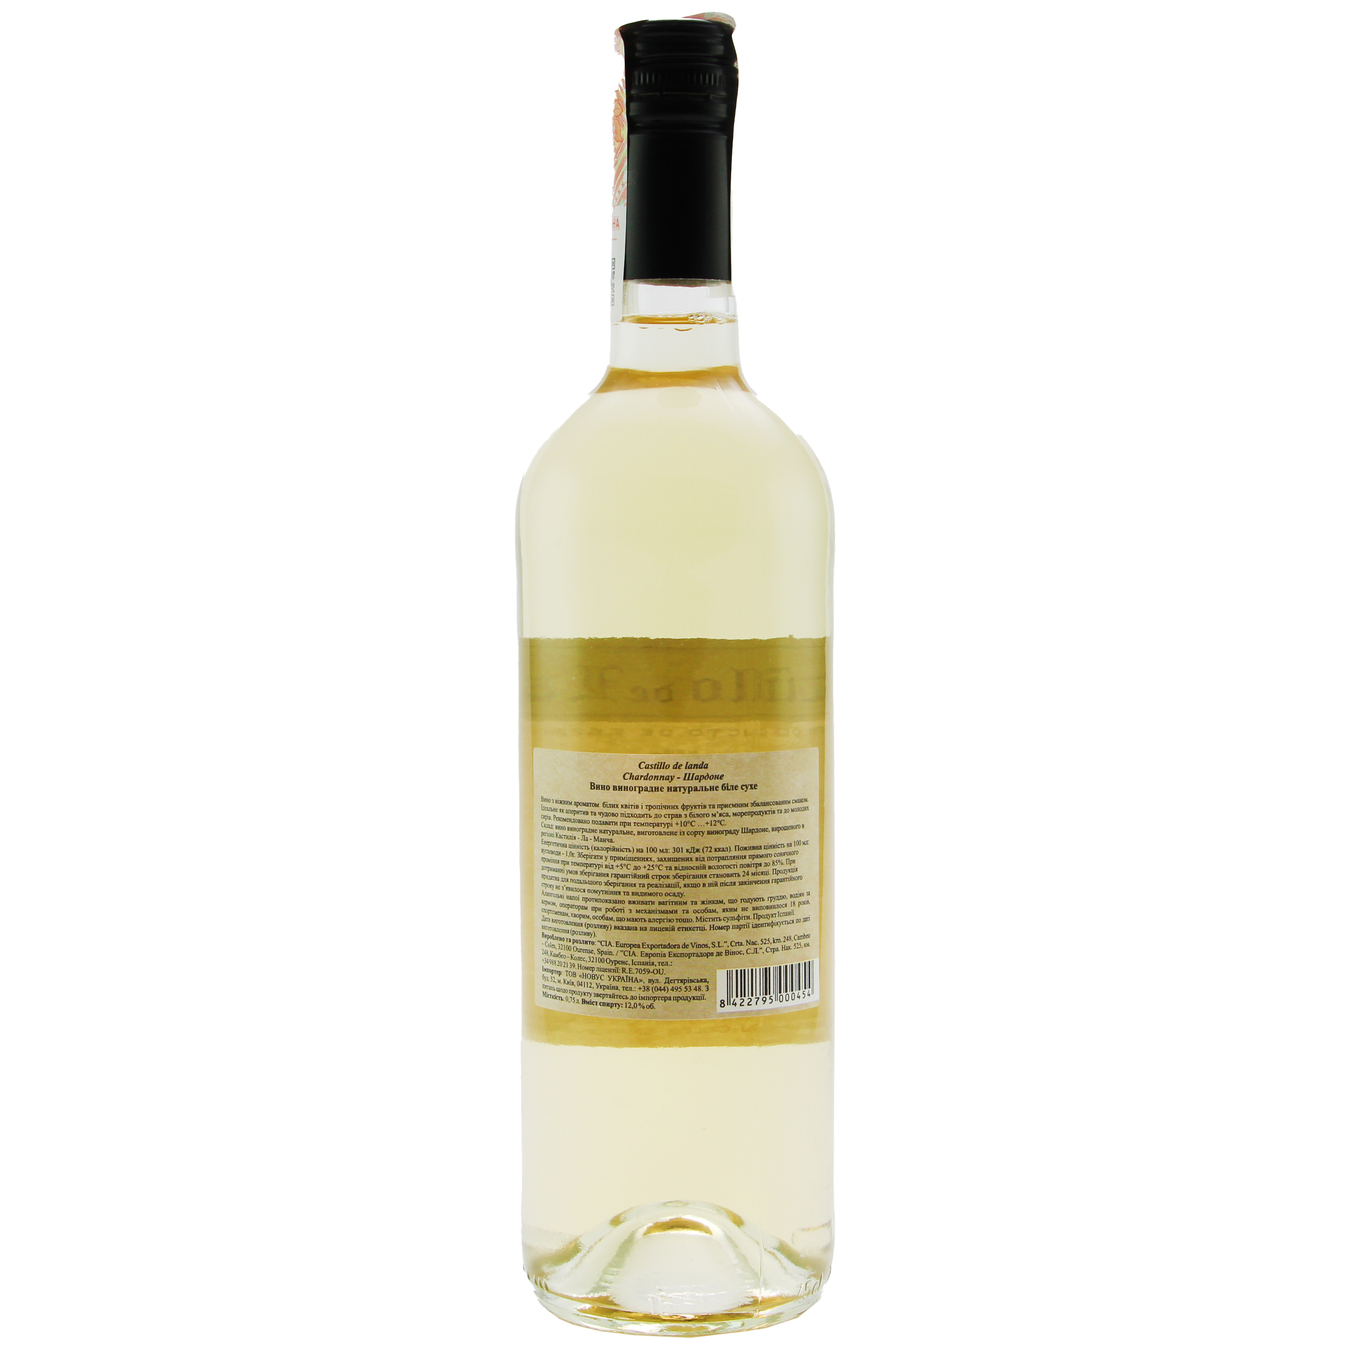 Castillo de landa Chardonnay white dry wine 12% 0,75l 2